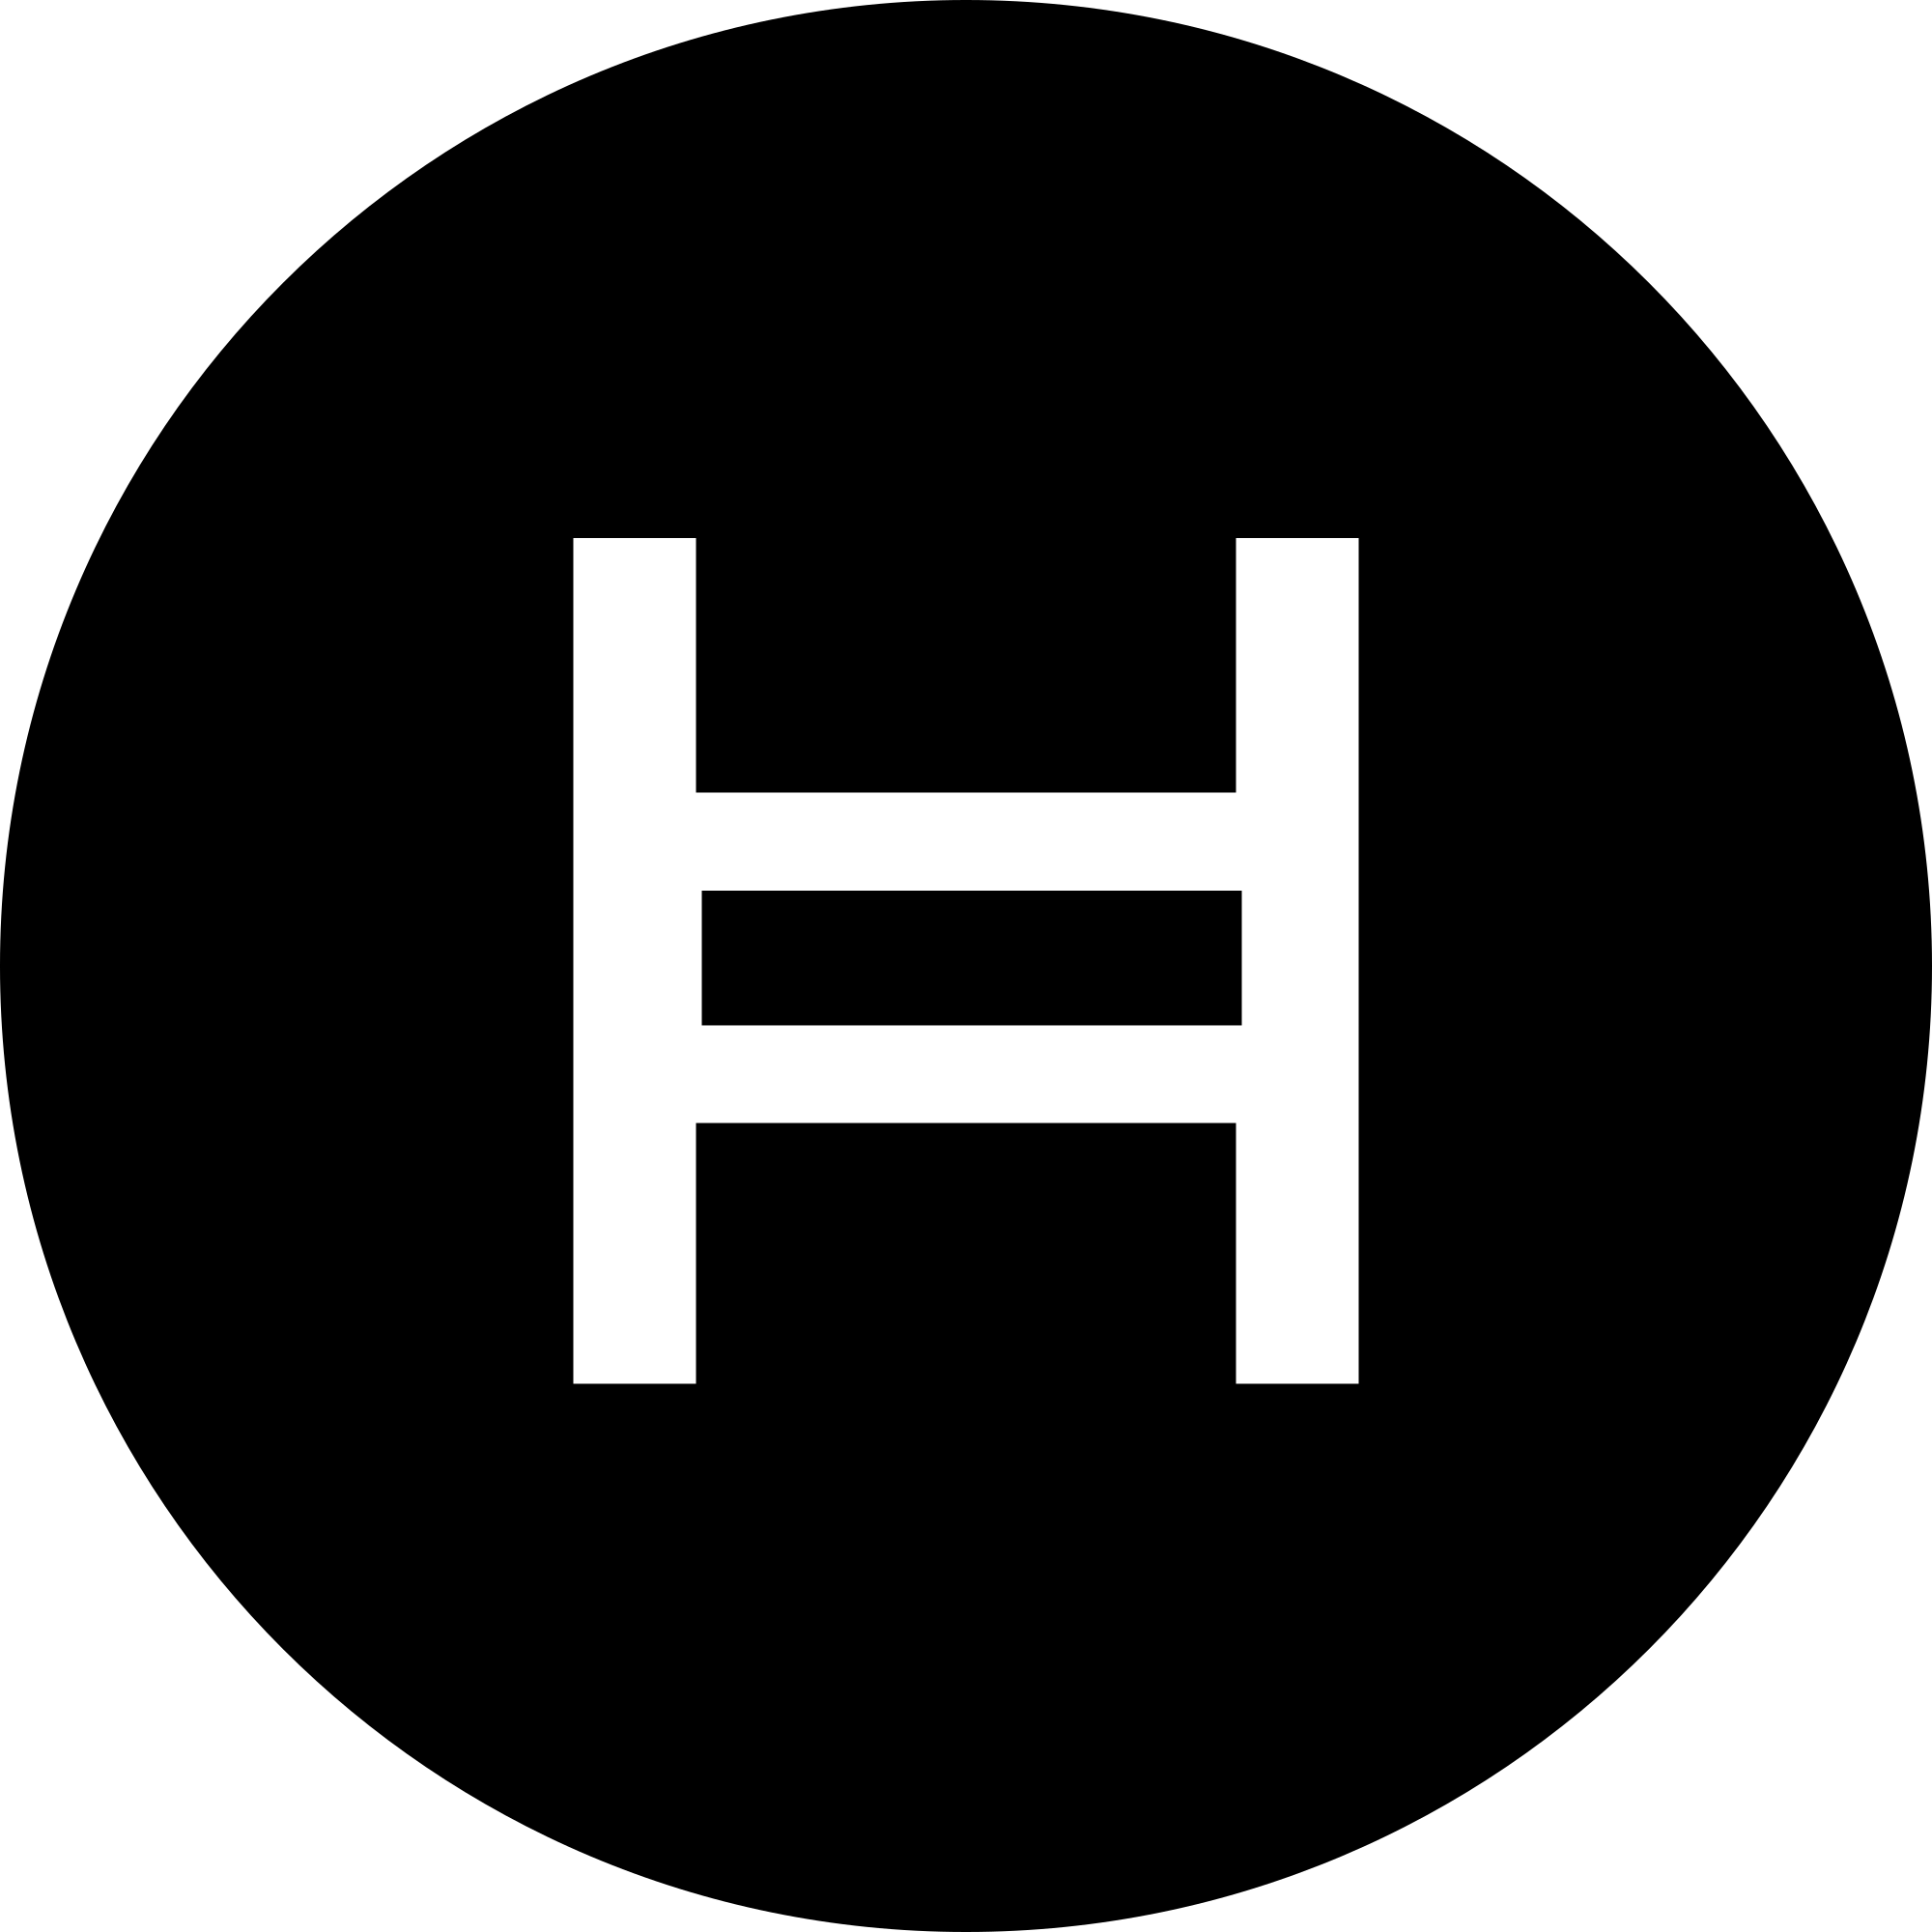 logotype hedera (hbar)